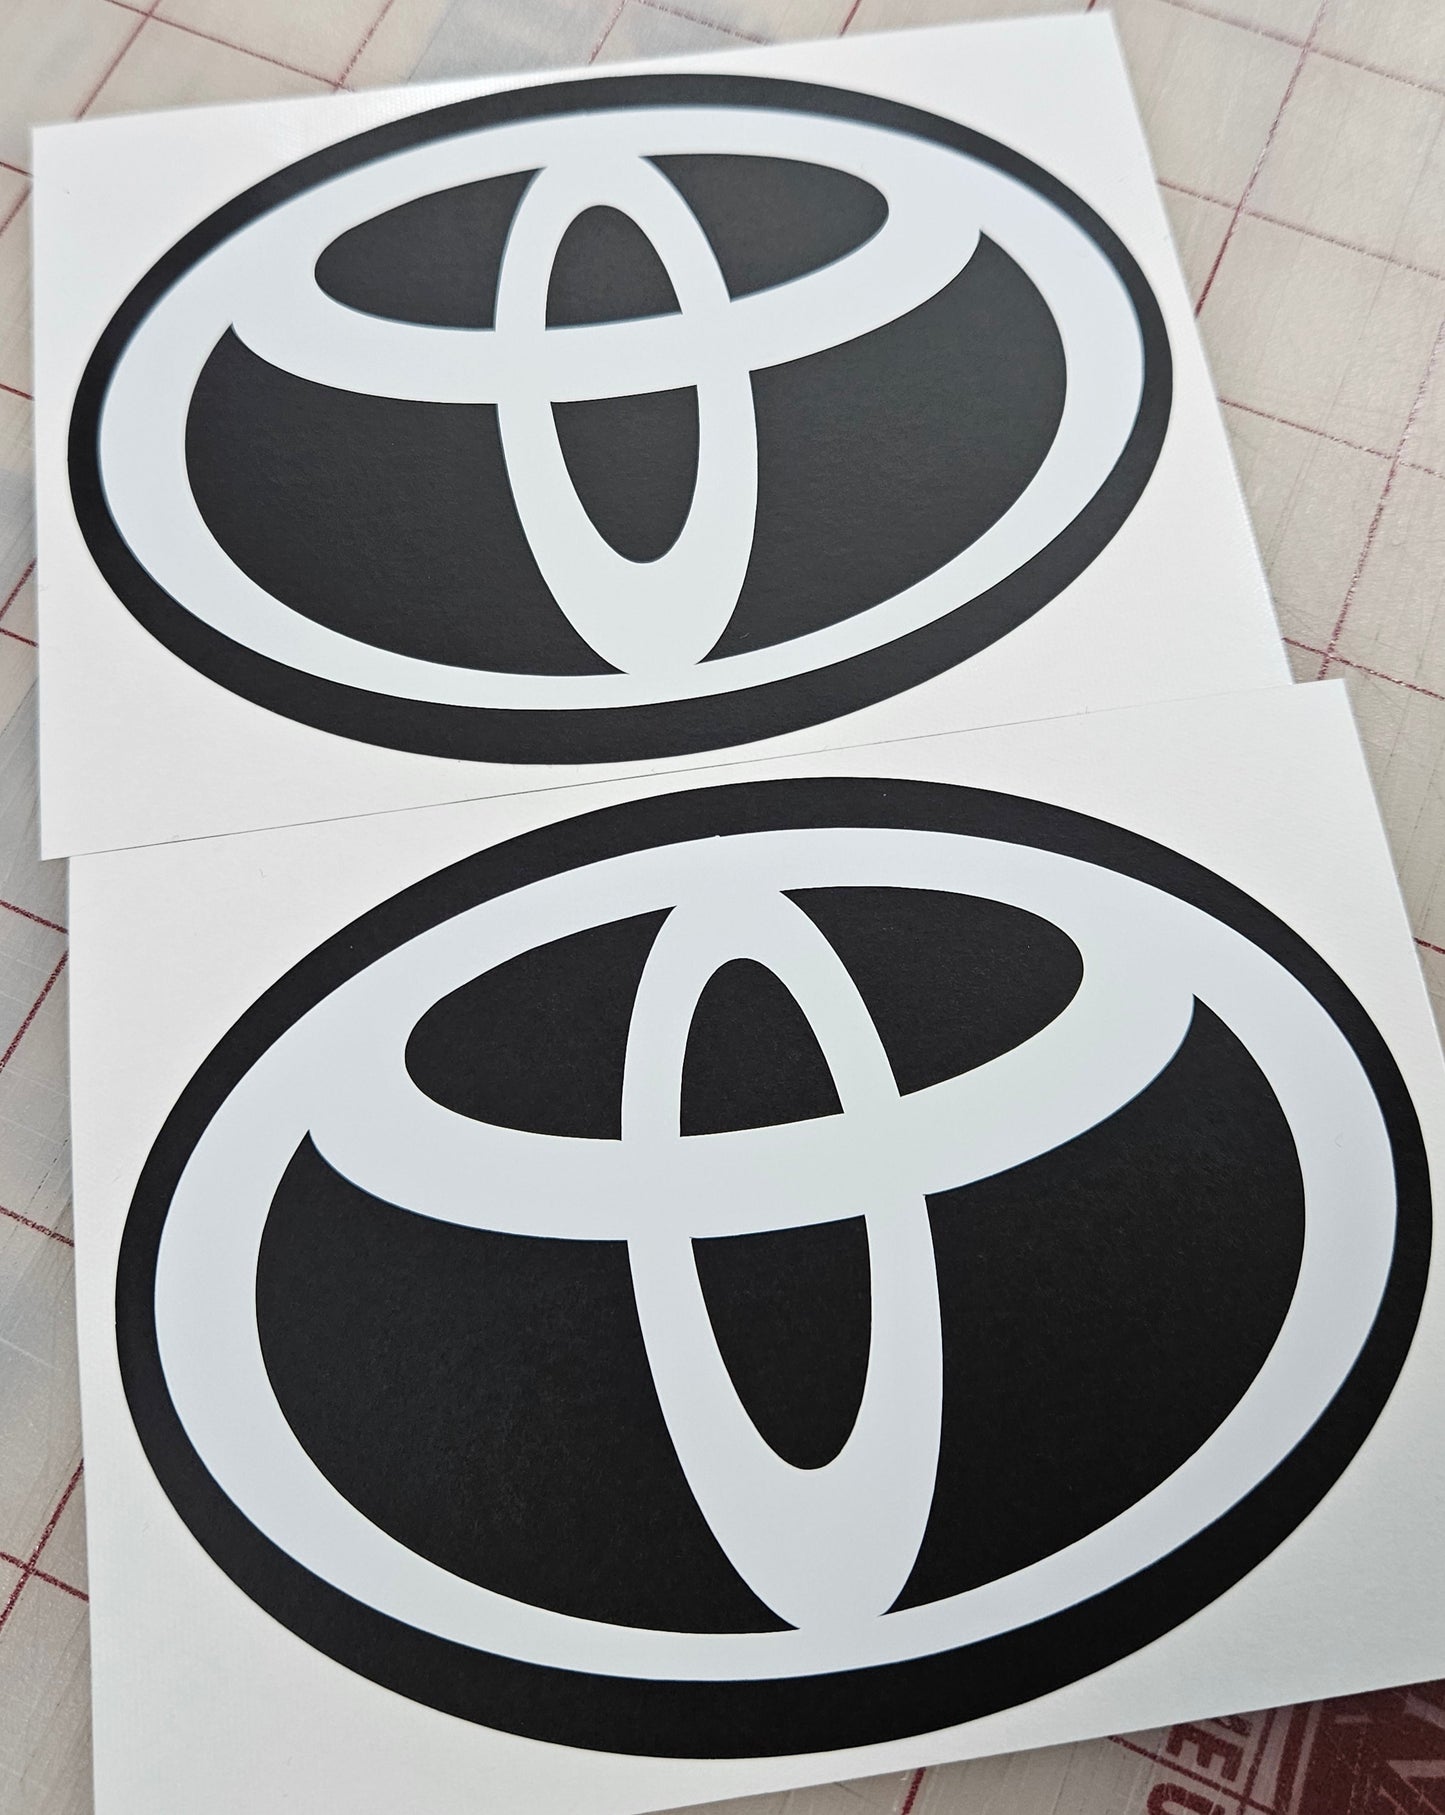 2022-2024 Toyota GR86 Emblem Vinyl Overlay Decal Set